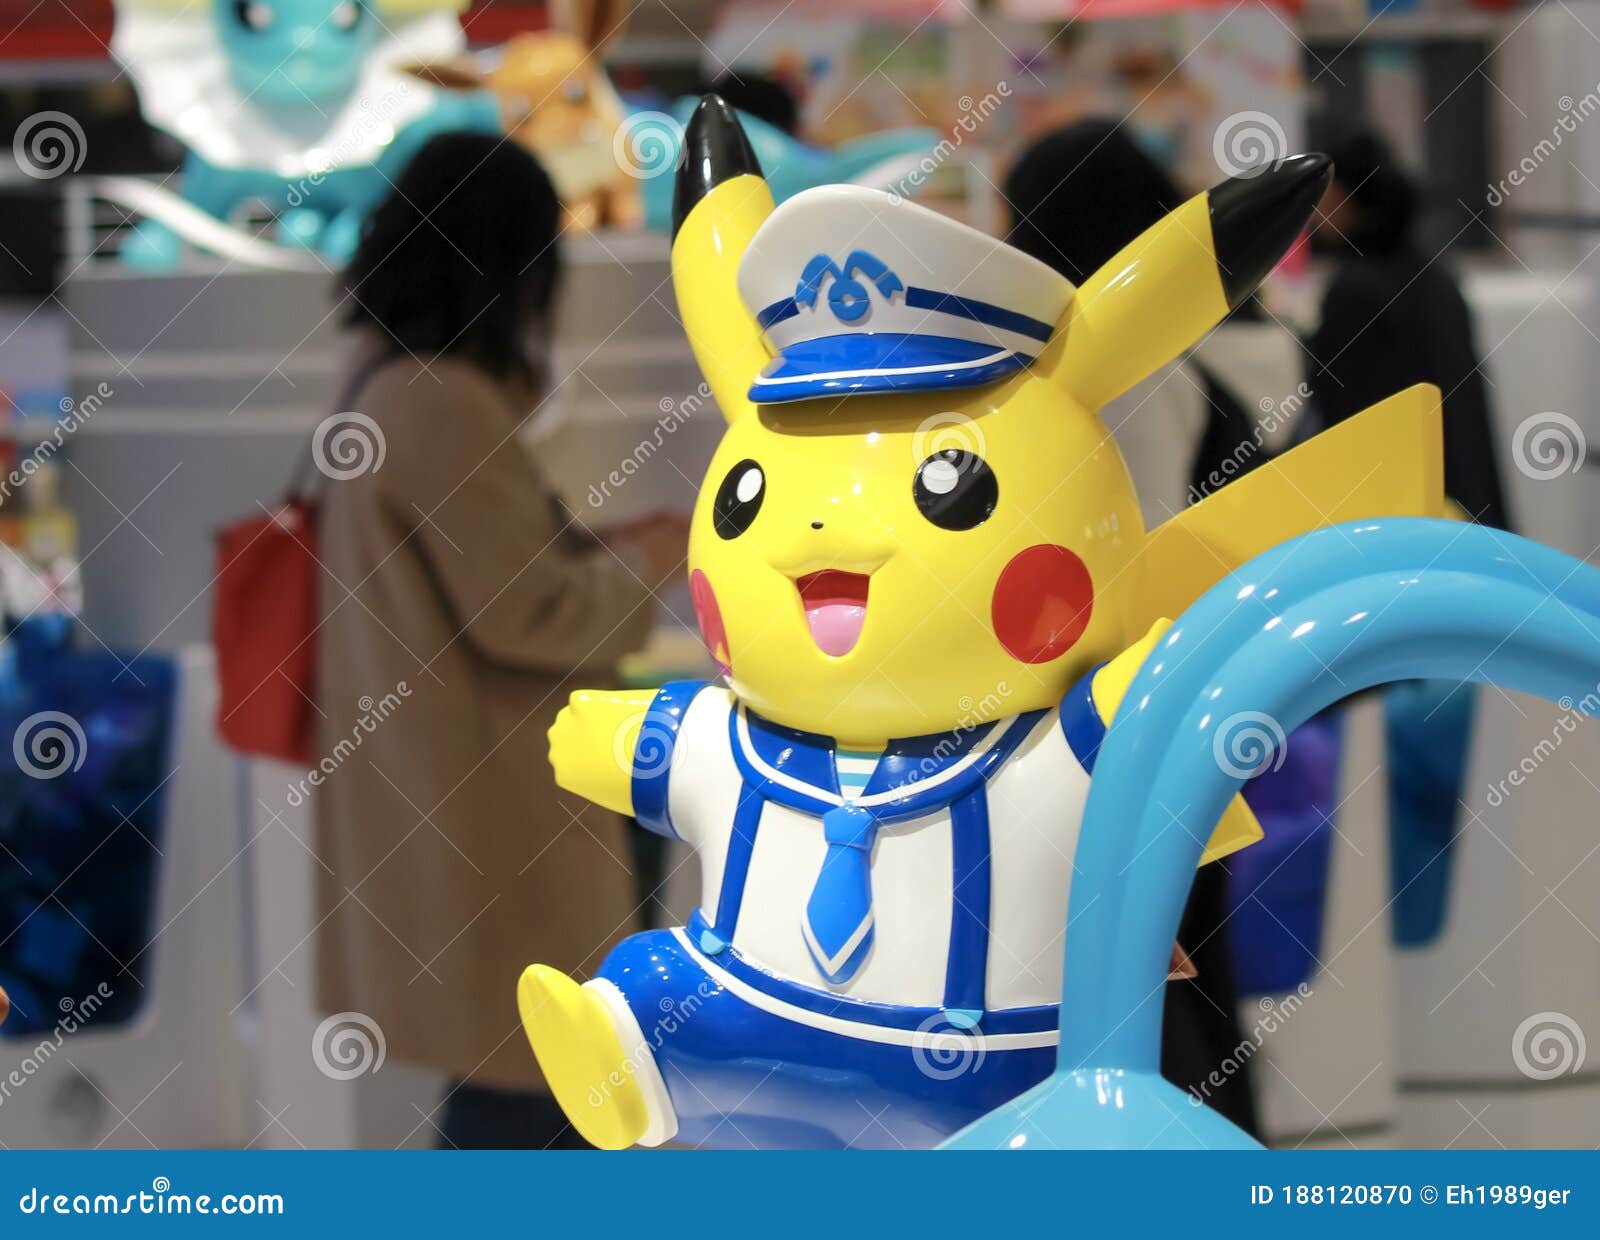 Pikachu Statue At The Pokemon Center Yokohama Editorial Image Image Of Pokemon Event